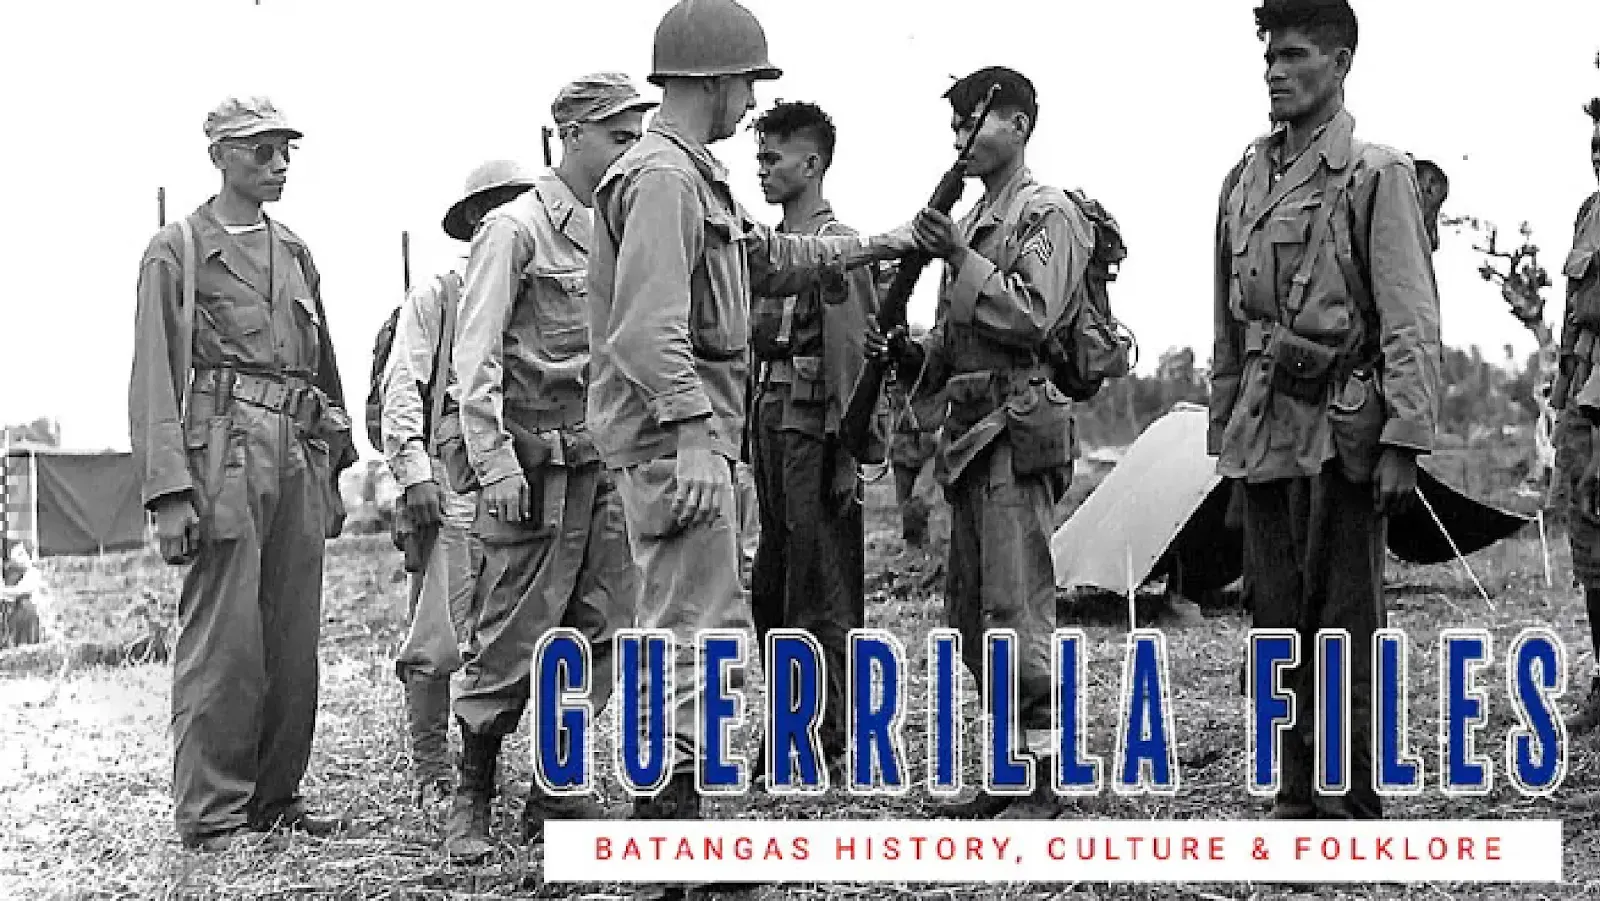 Batangas guerrillas WWII